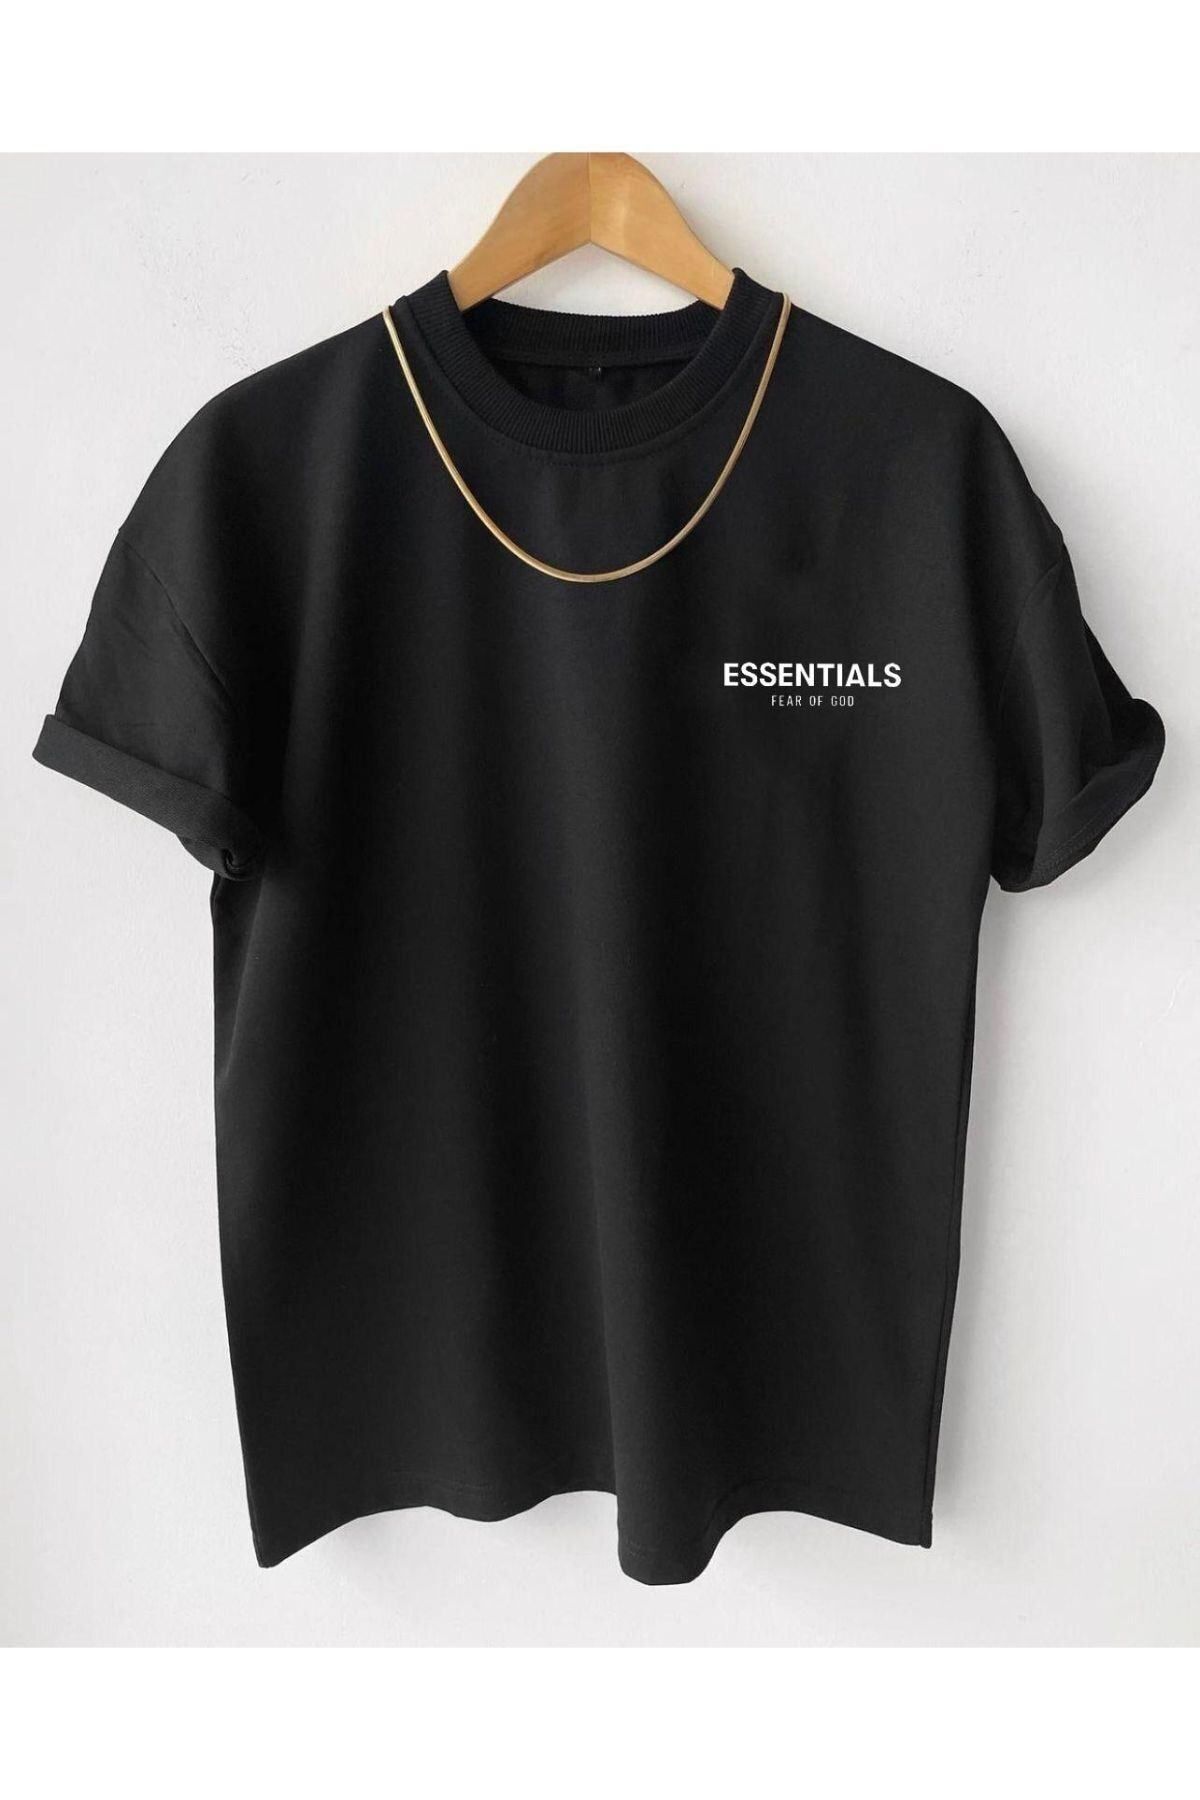 FANBOX SHOP Erkek Siyah Essentials Baskılı Oversize Bisiklet Yaka Kısa Kollu T-shirt